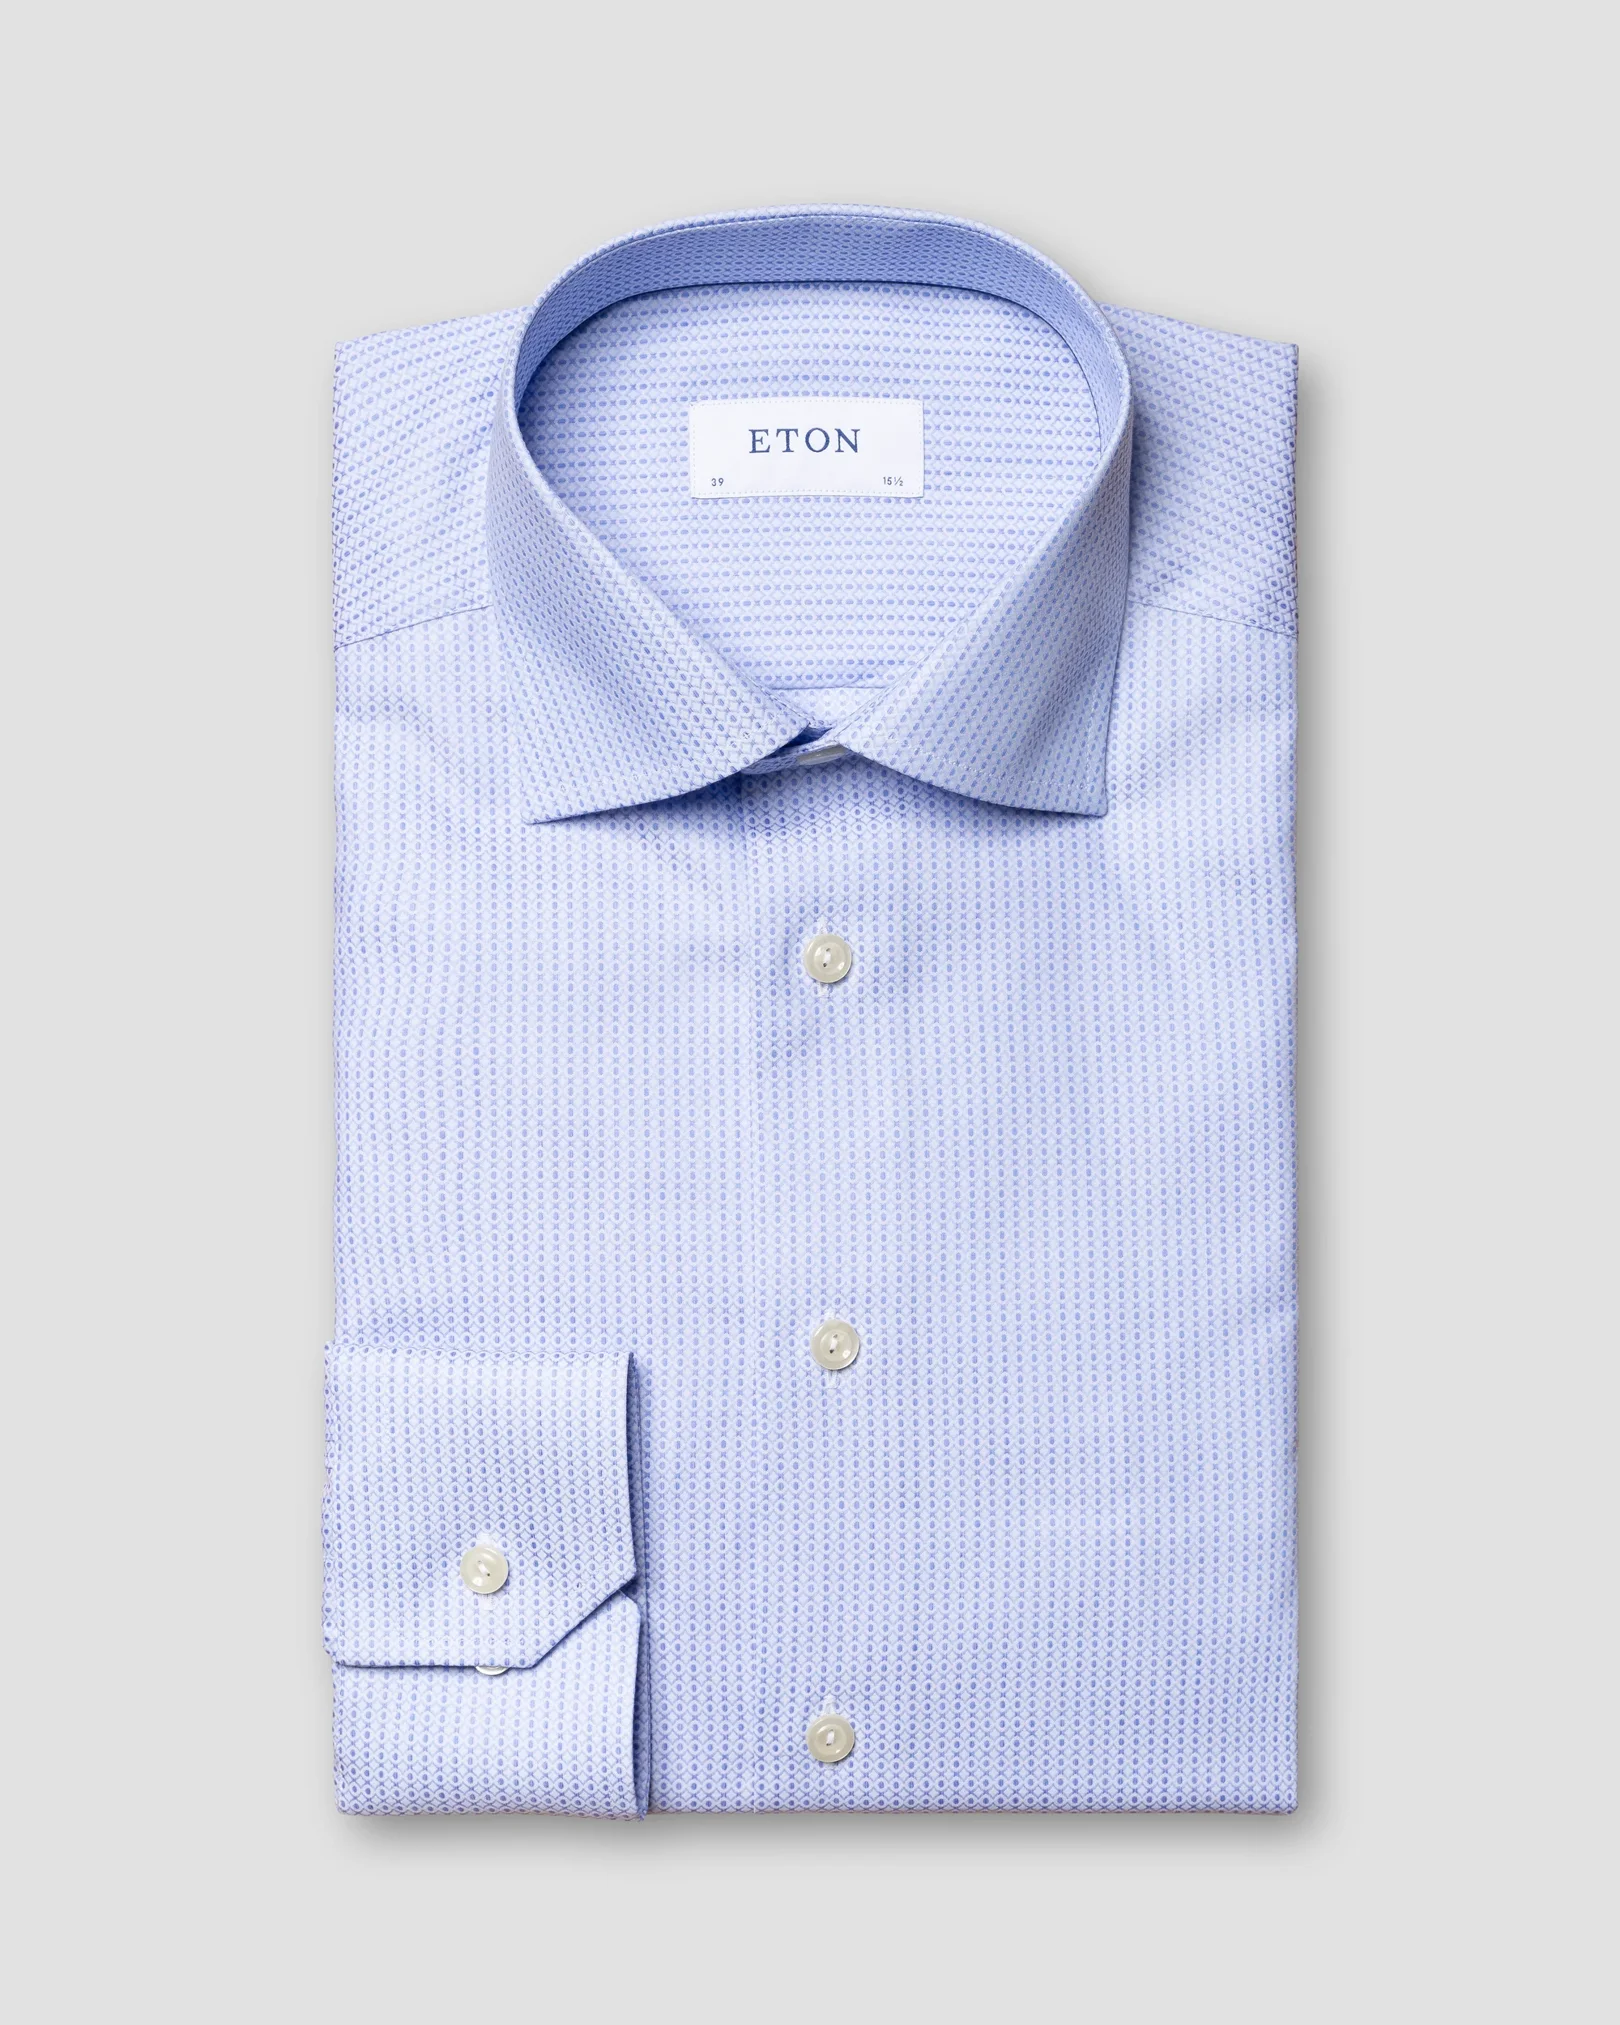 Eton - blue brocade shirt